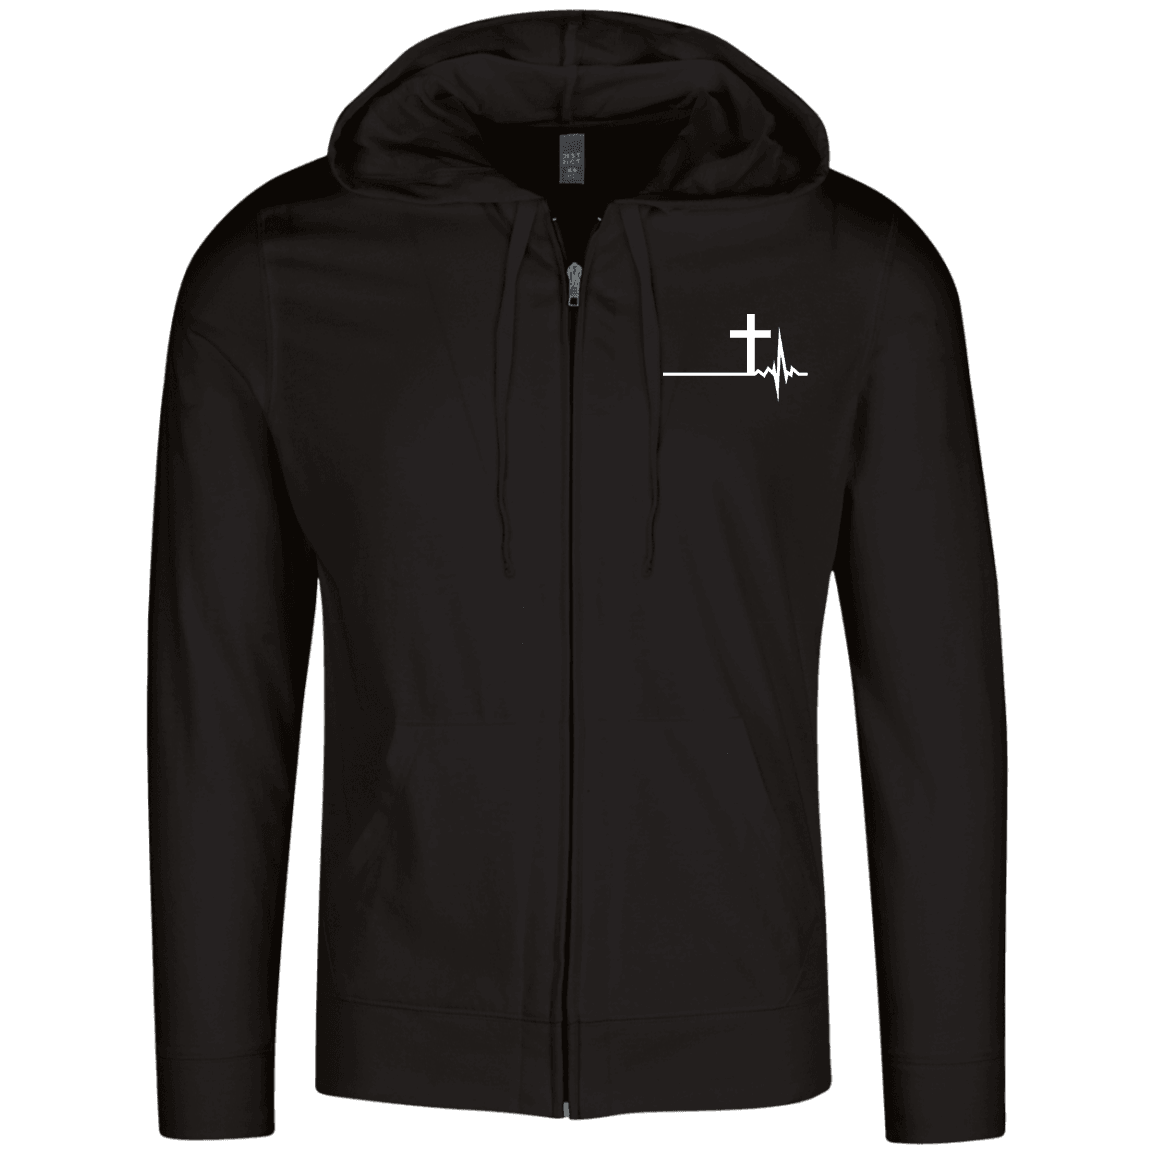 Designs by MyUtopia Shout Out:Cross Heartbeat Lightweight Full Zip Hoodie,X-Small / Black,Sweatshirts